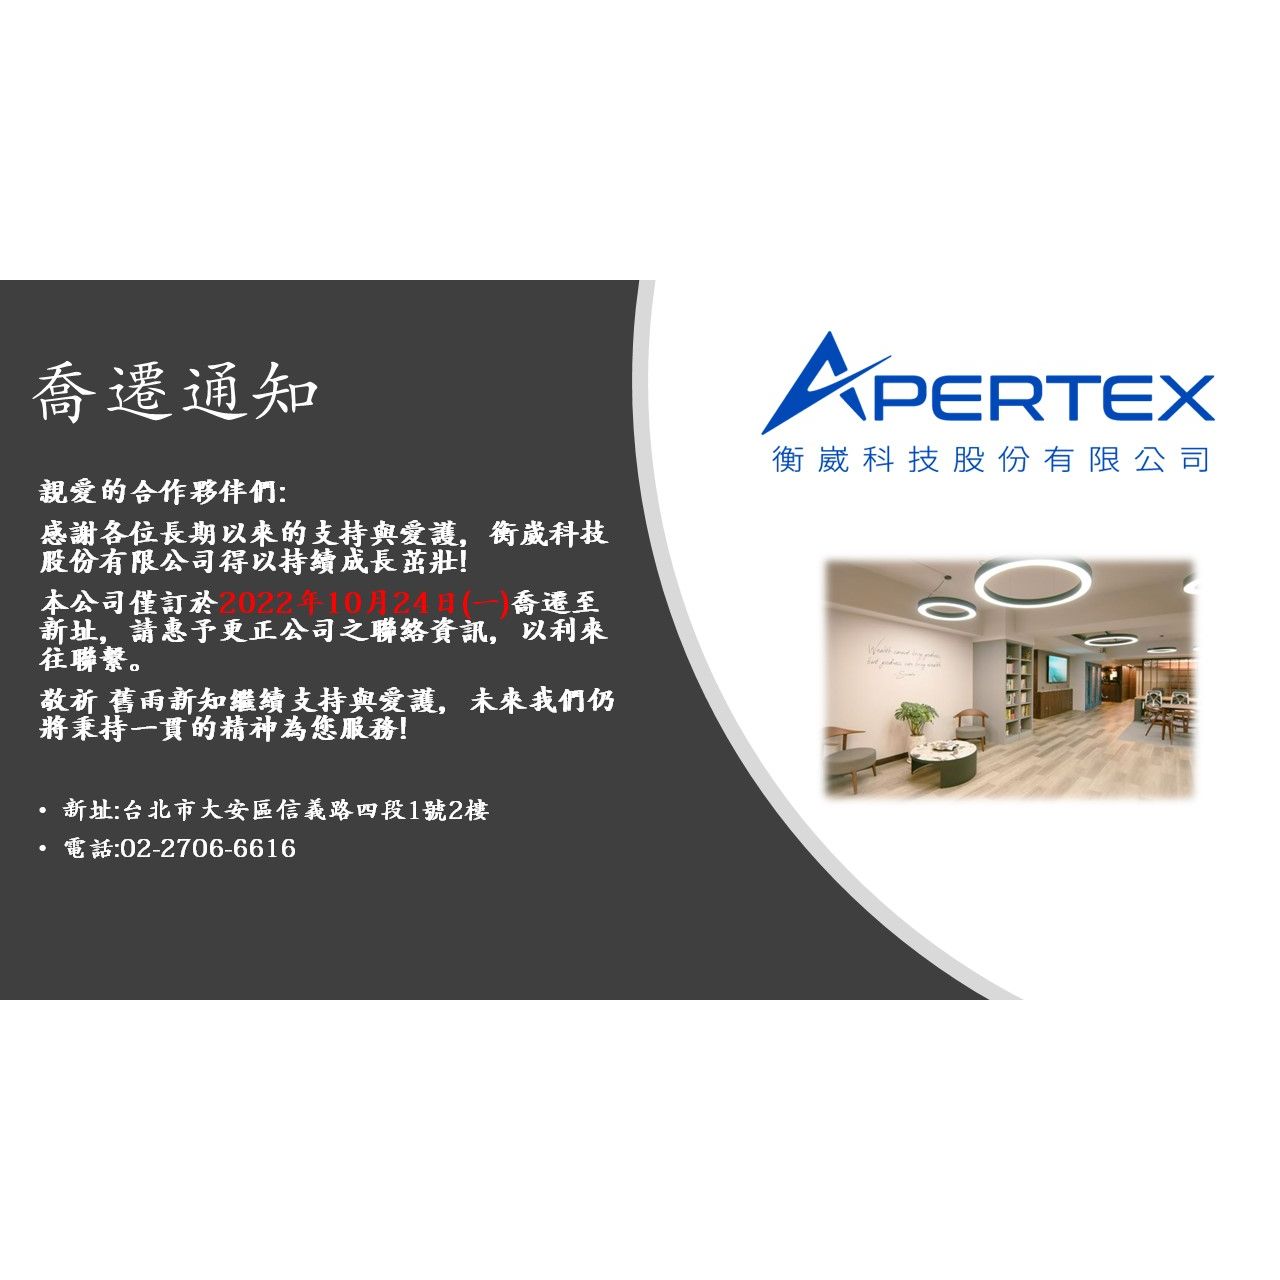 Apertex Technology Taiwan - 衡崴科技喬遷通知!